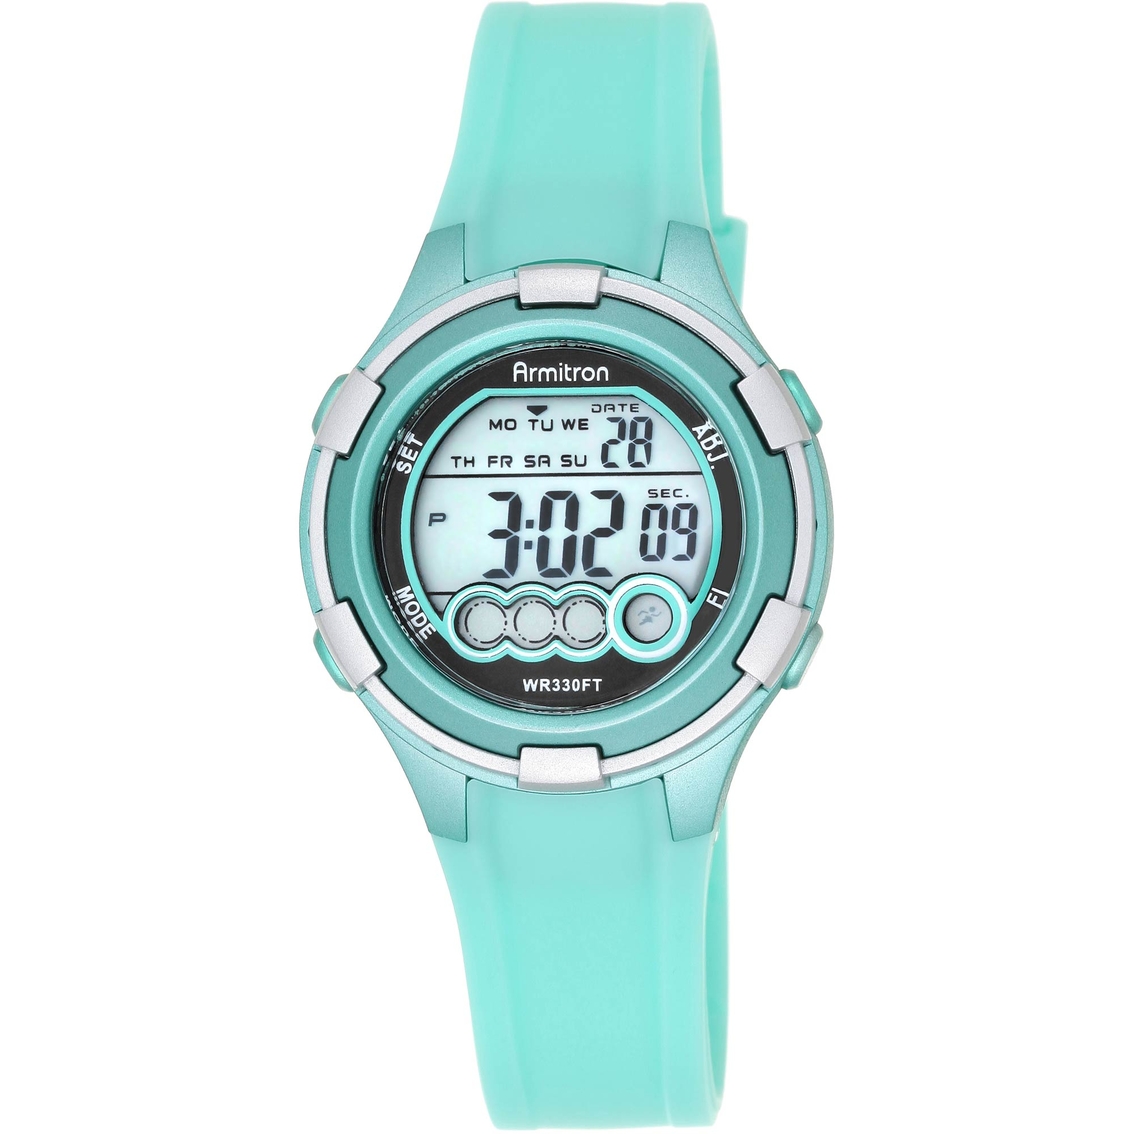  <img src="ana.jpg" alt="ana aqua blue waterproof watches"/> 